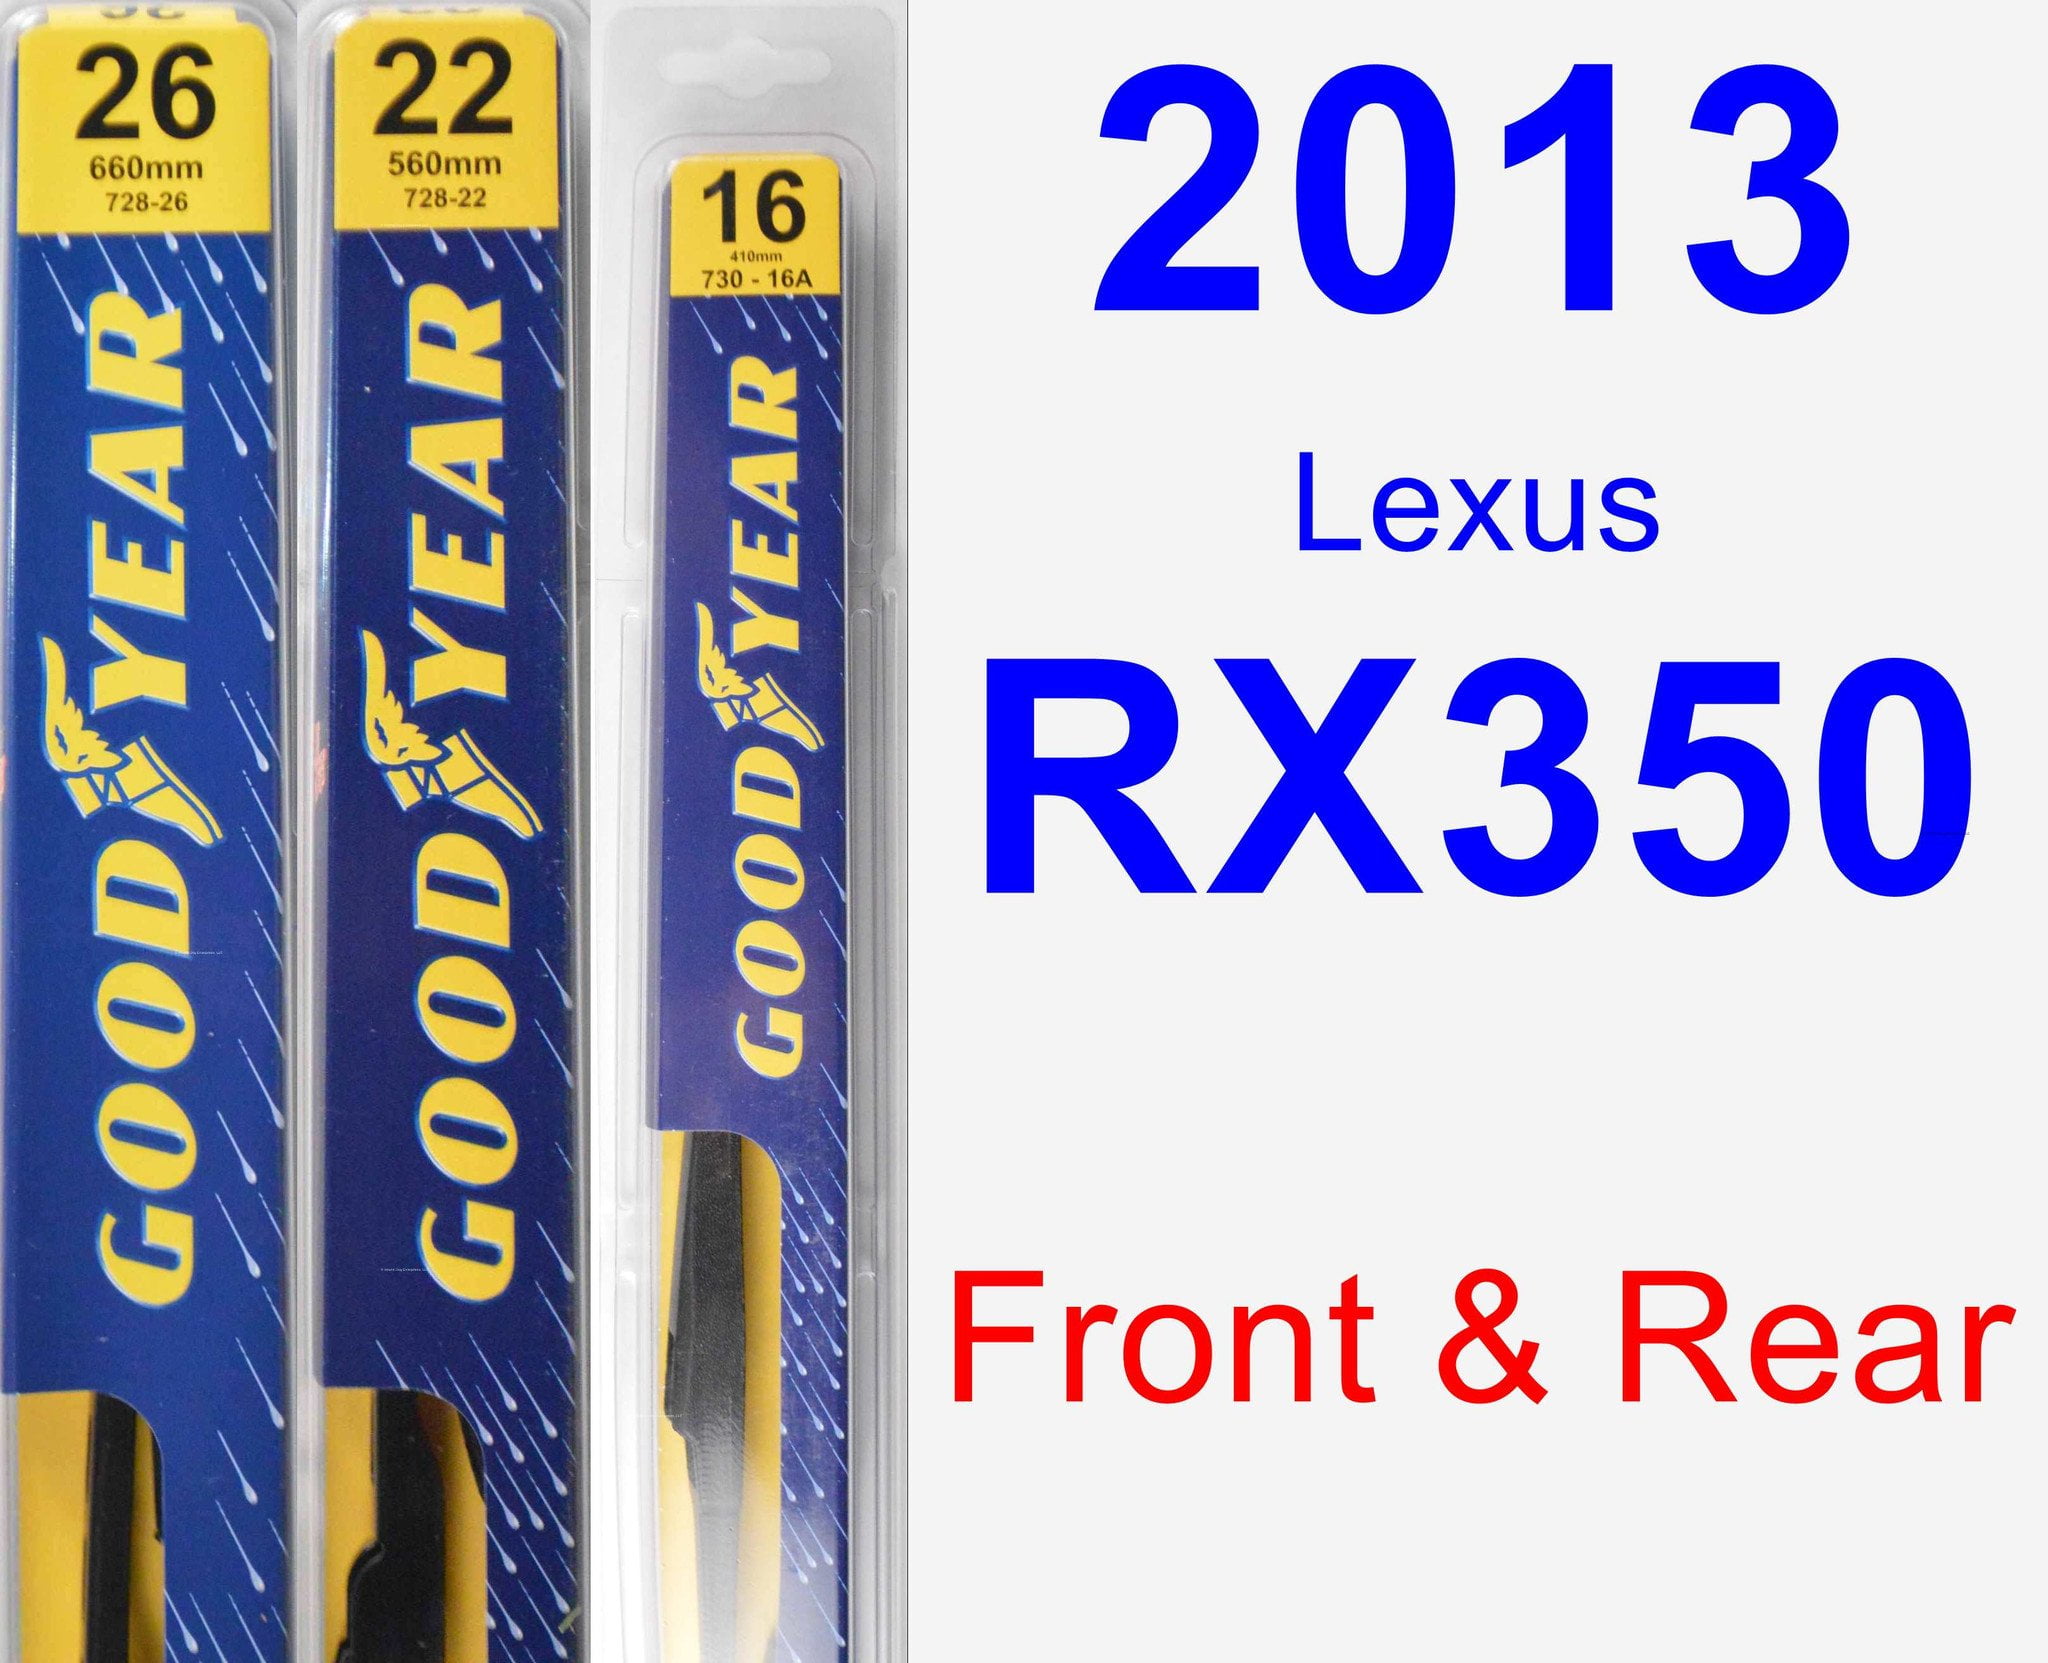 2013 Lexus RX350 Wiper Blade Set/Kit (Front & Rear) (3 Blades) - Rear - Walmart.com - Walmart.com 2013 Lexus Rx 350 Rear Wiper Replacement